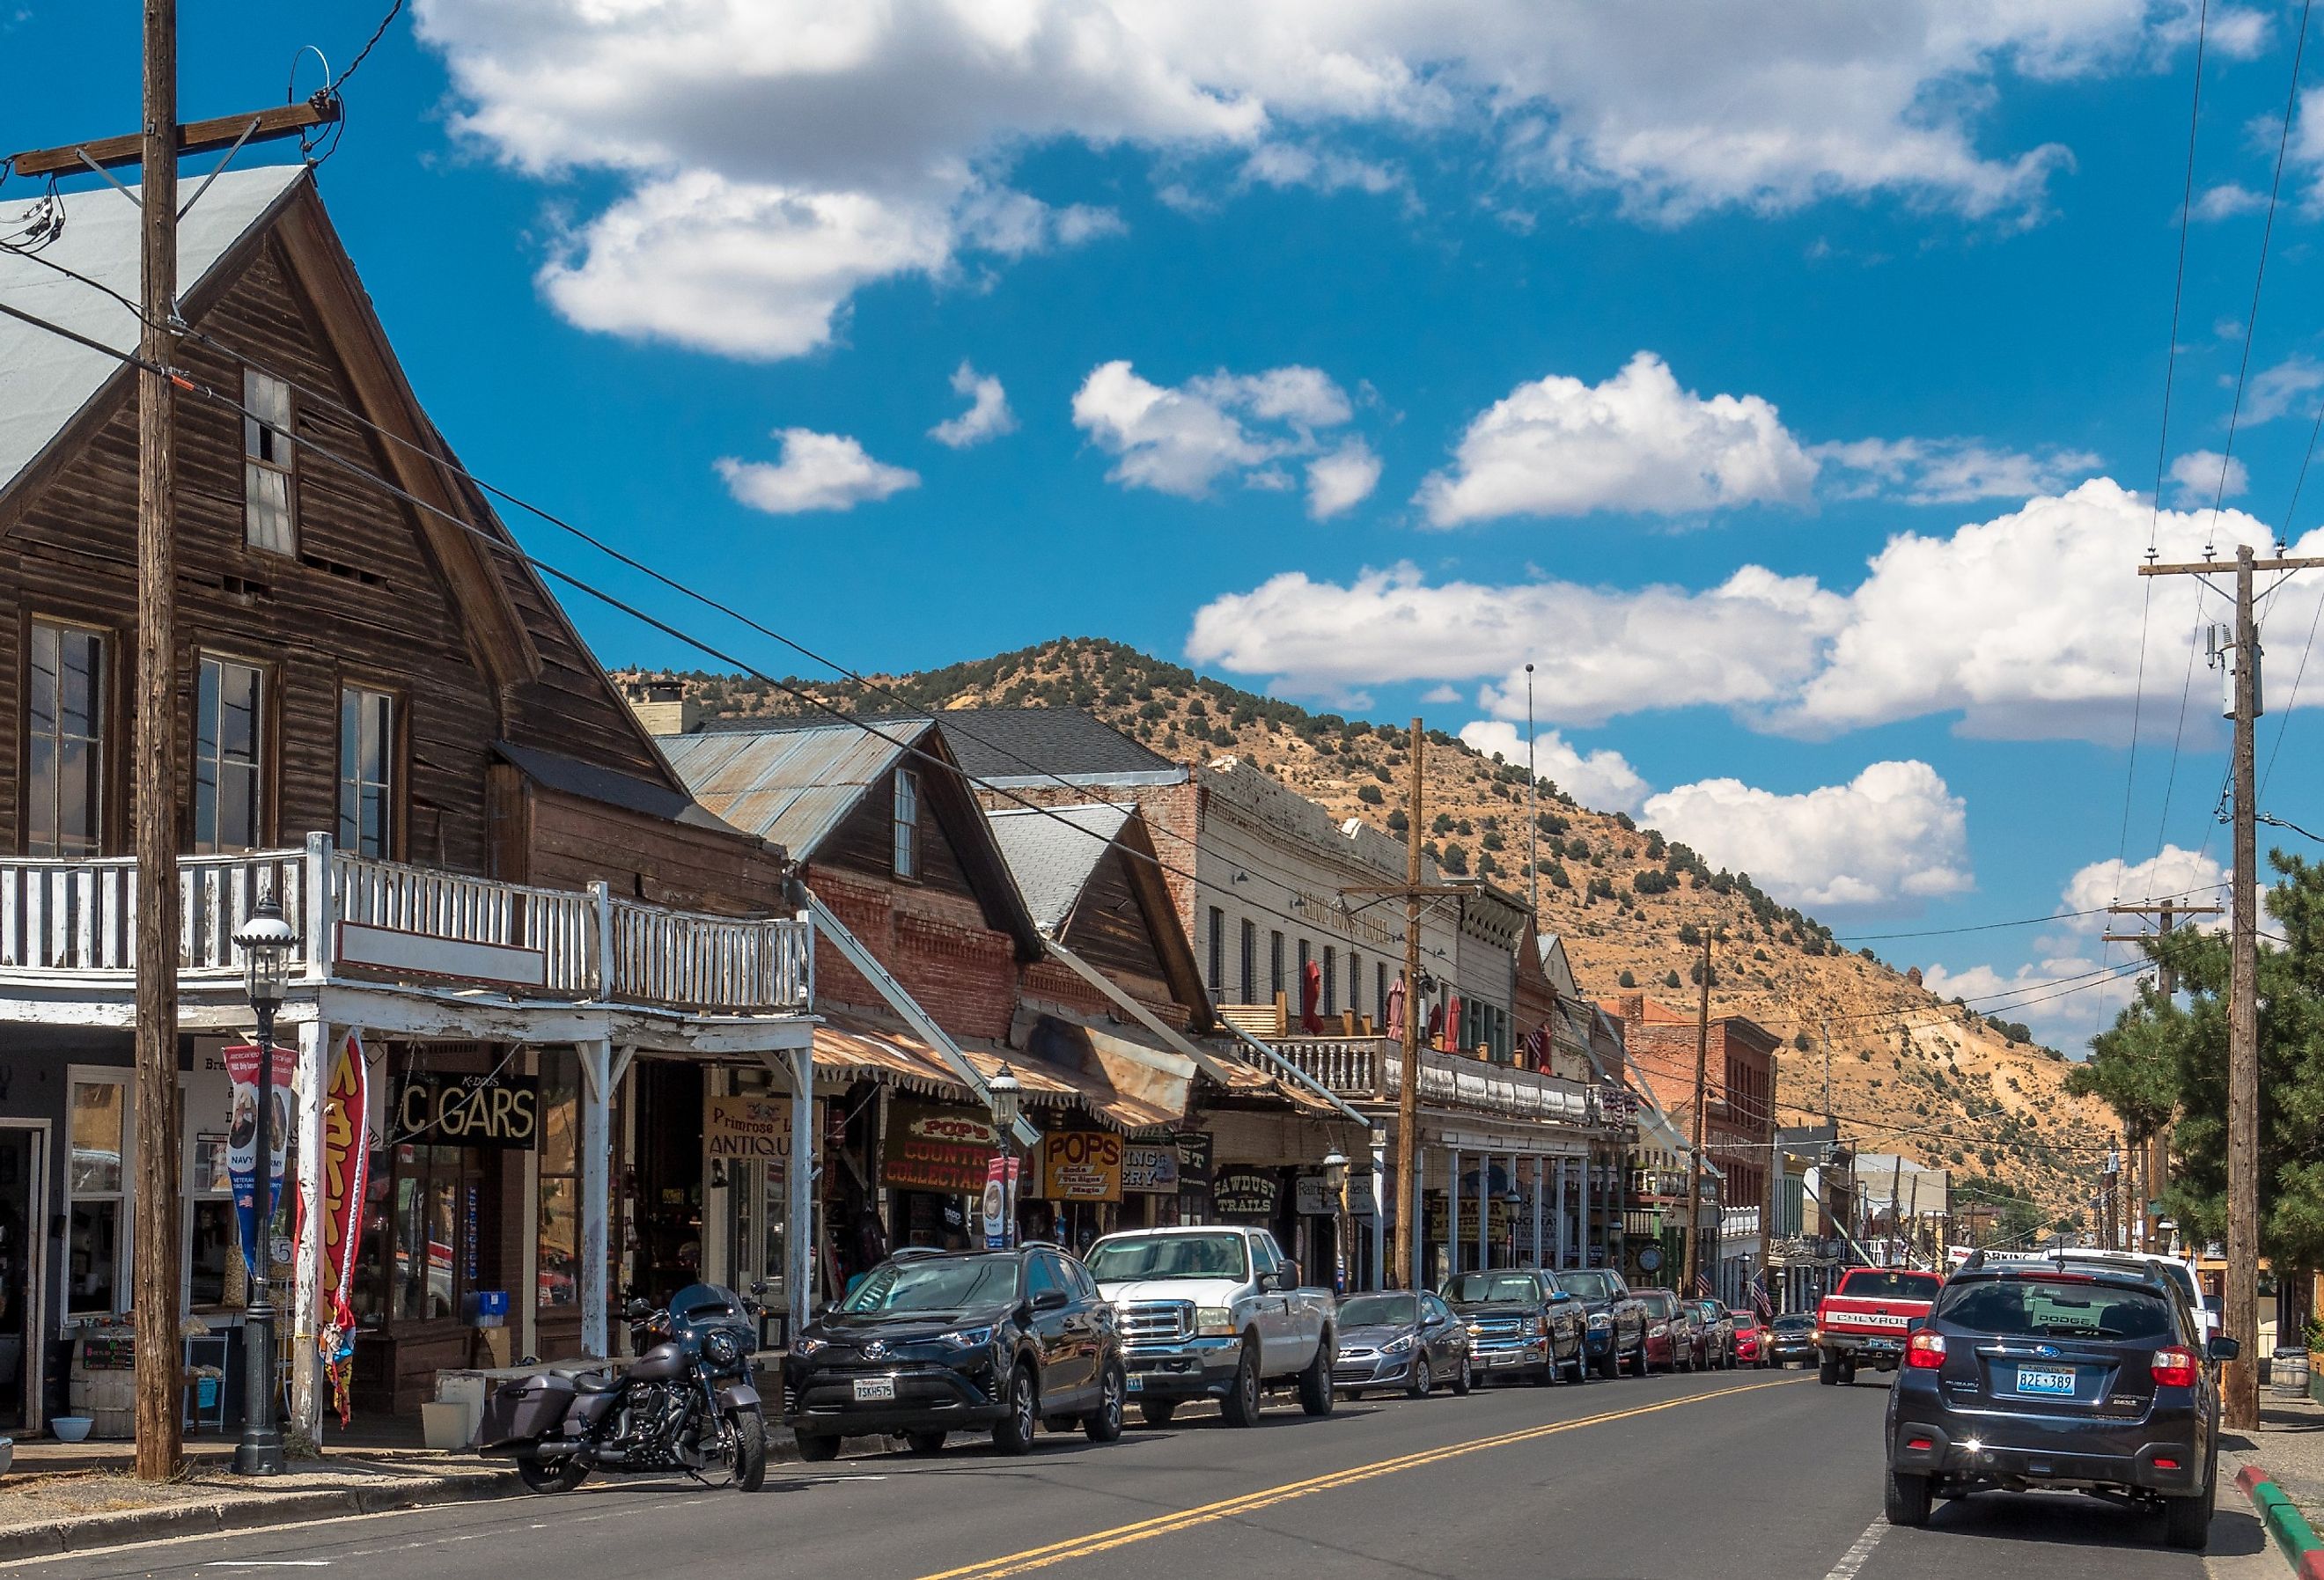 Buildings along Main Street in Virginia City, Nevada. Image credit M. Vinuesa via Shutterstock